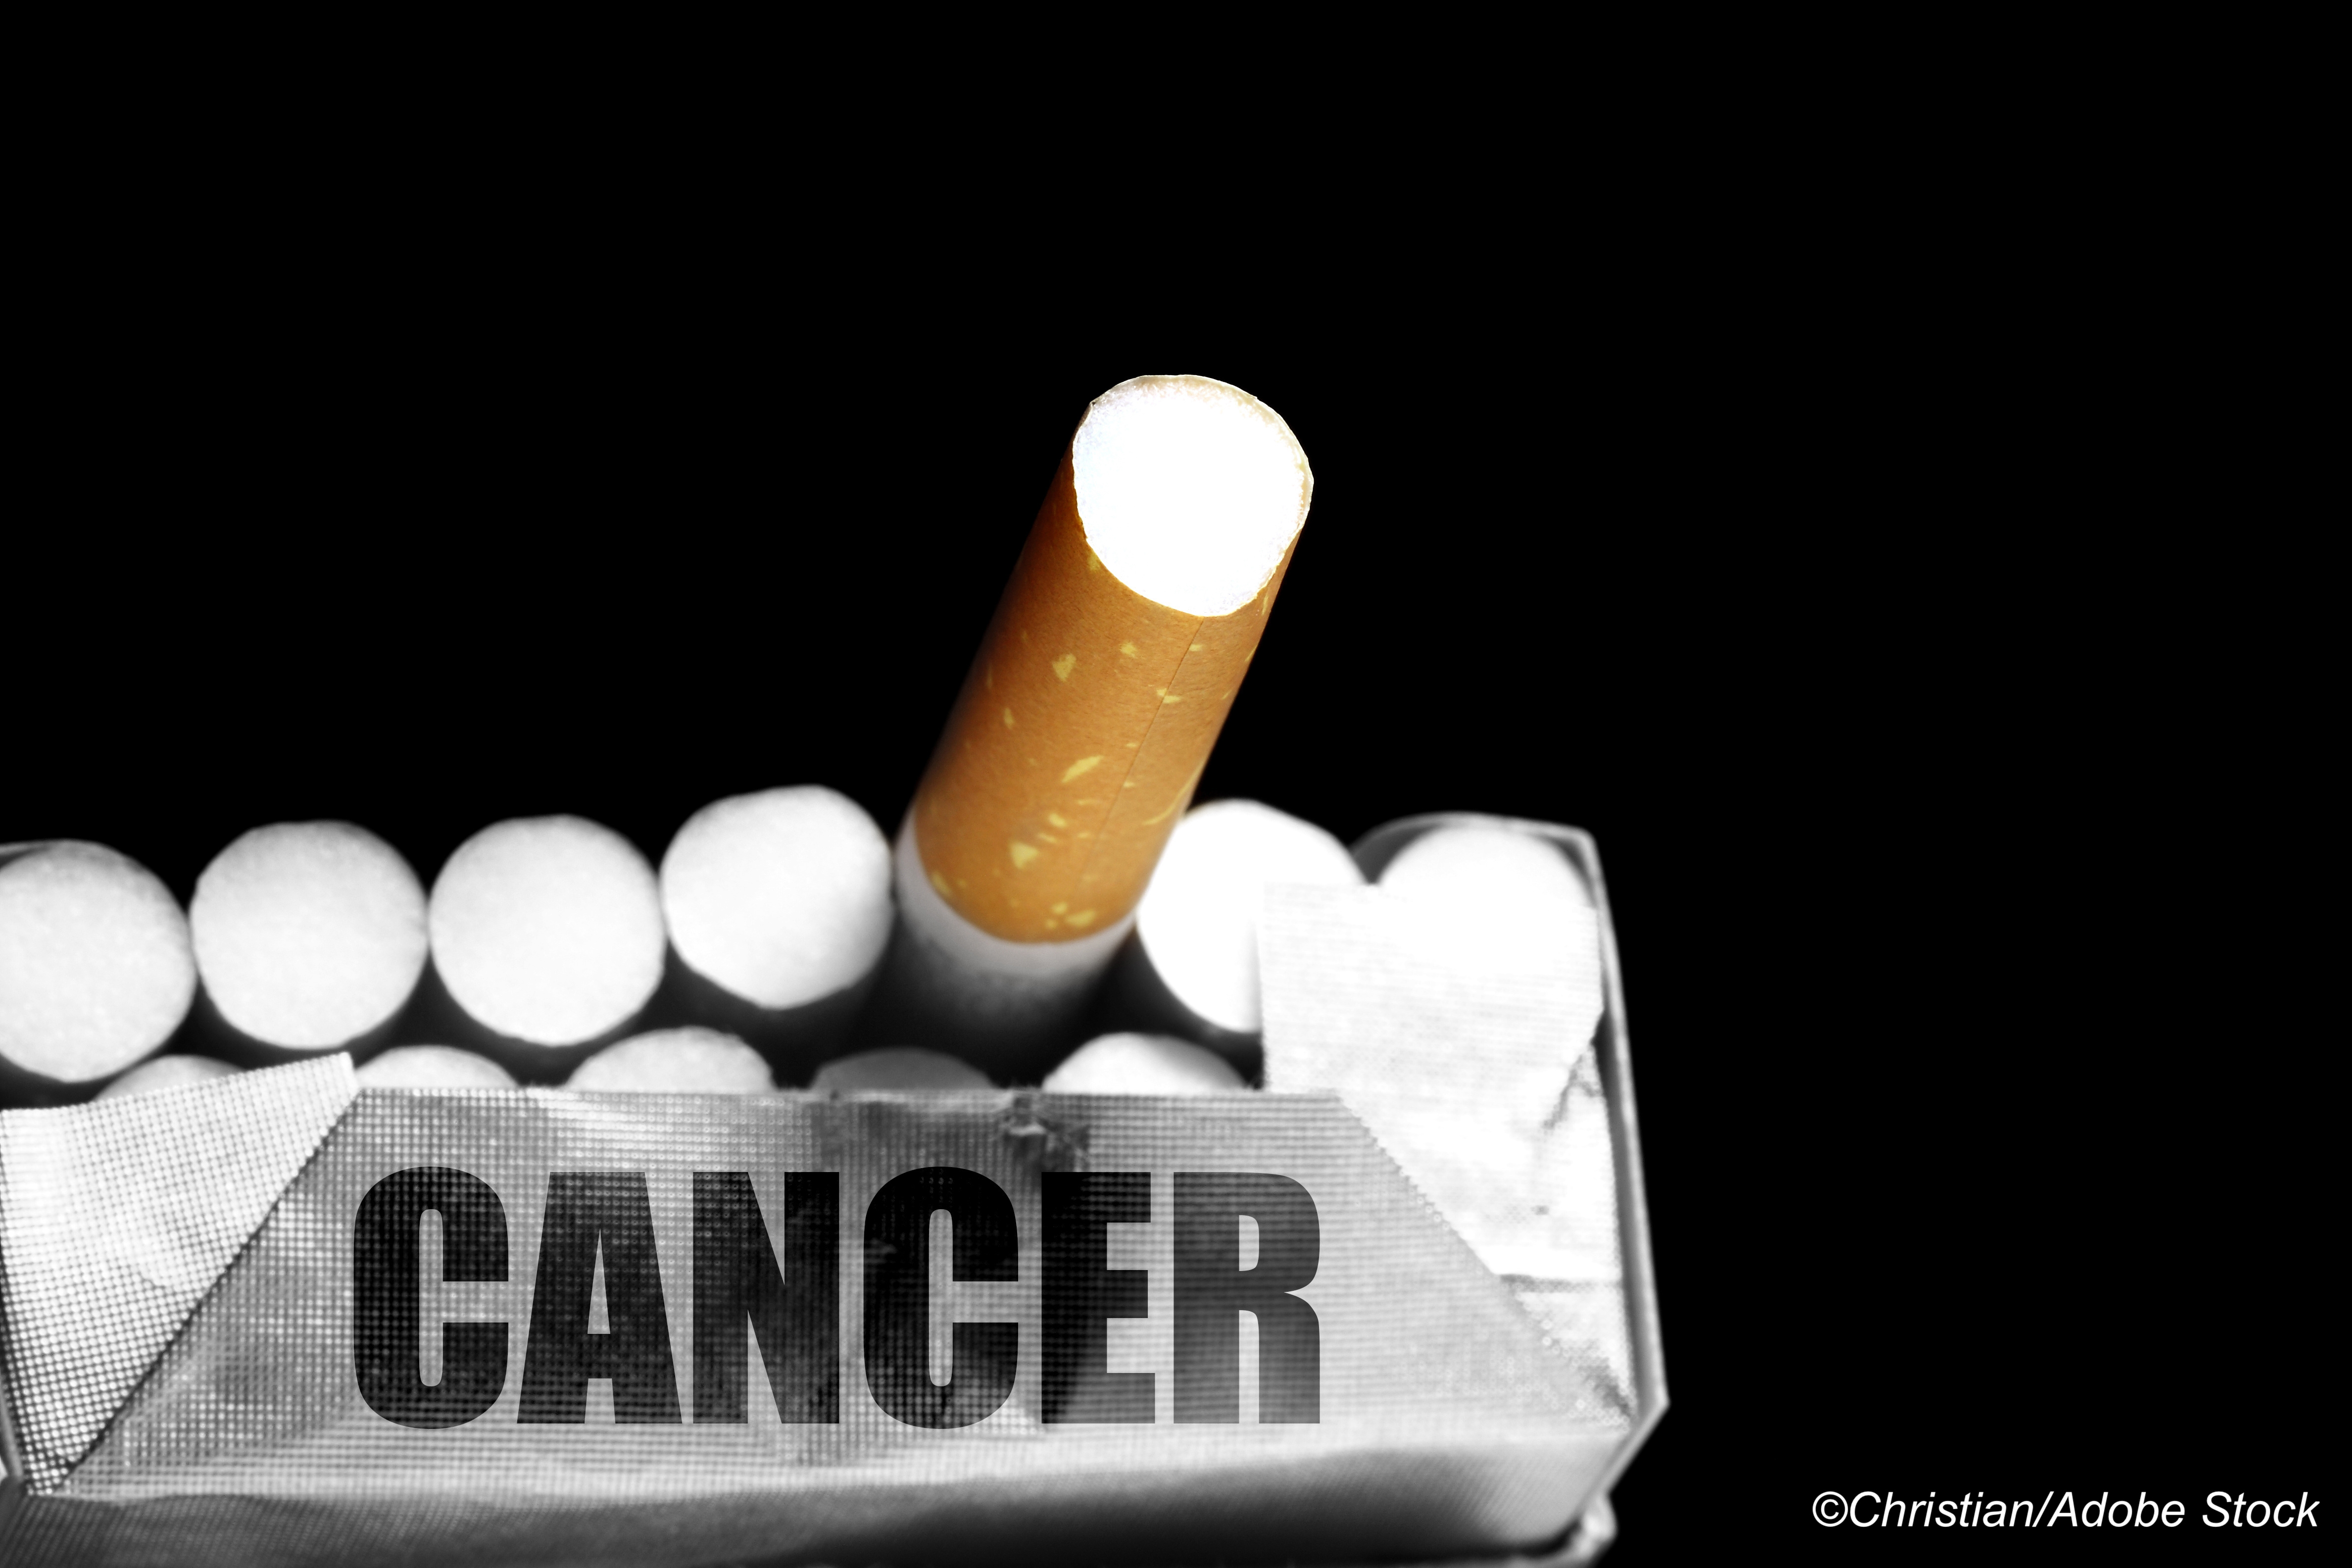 Graphic Cigarette Warning Labels Increase Pack-Hiding Behavior